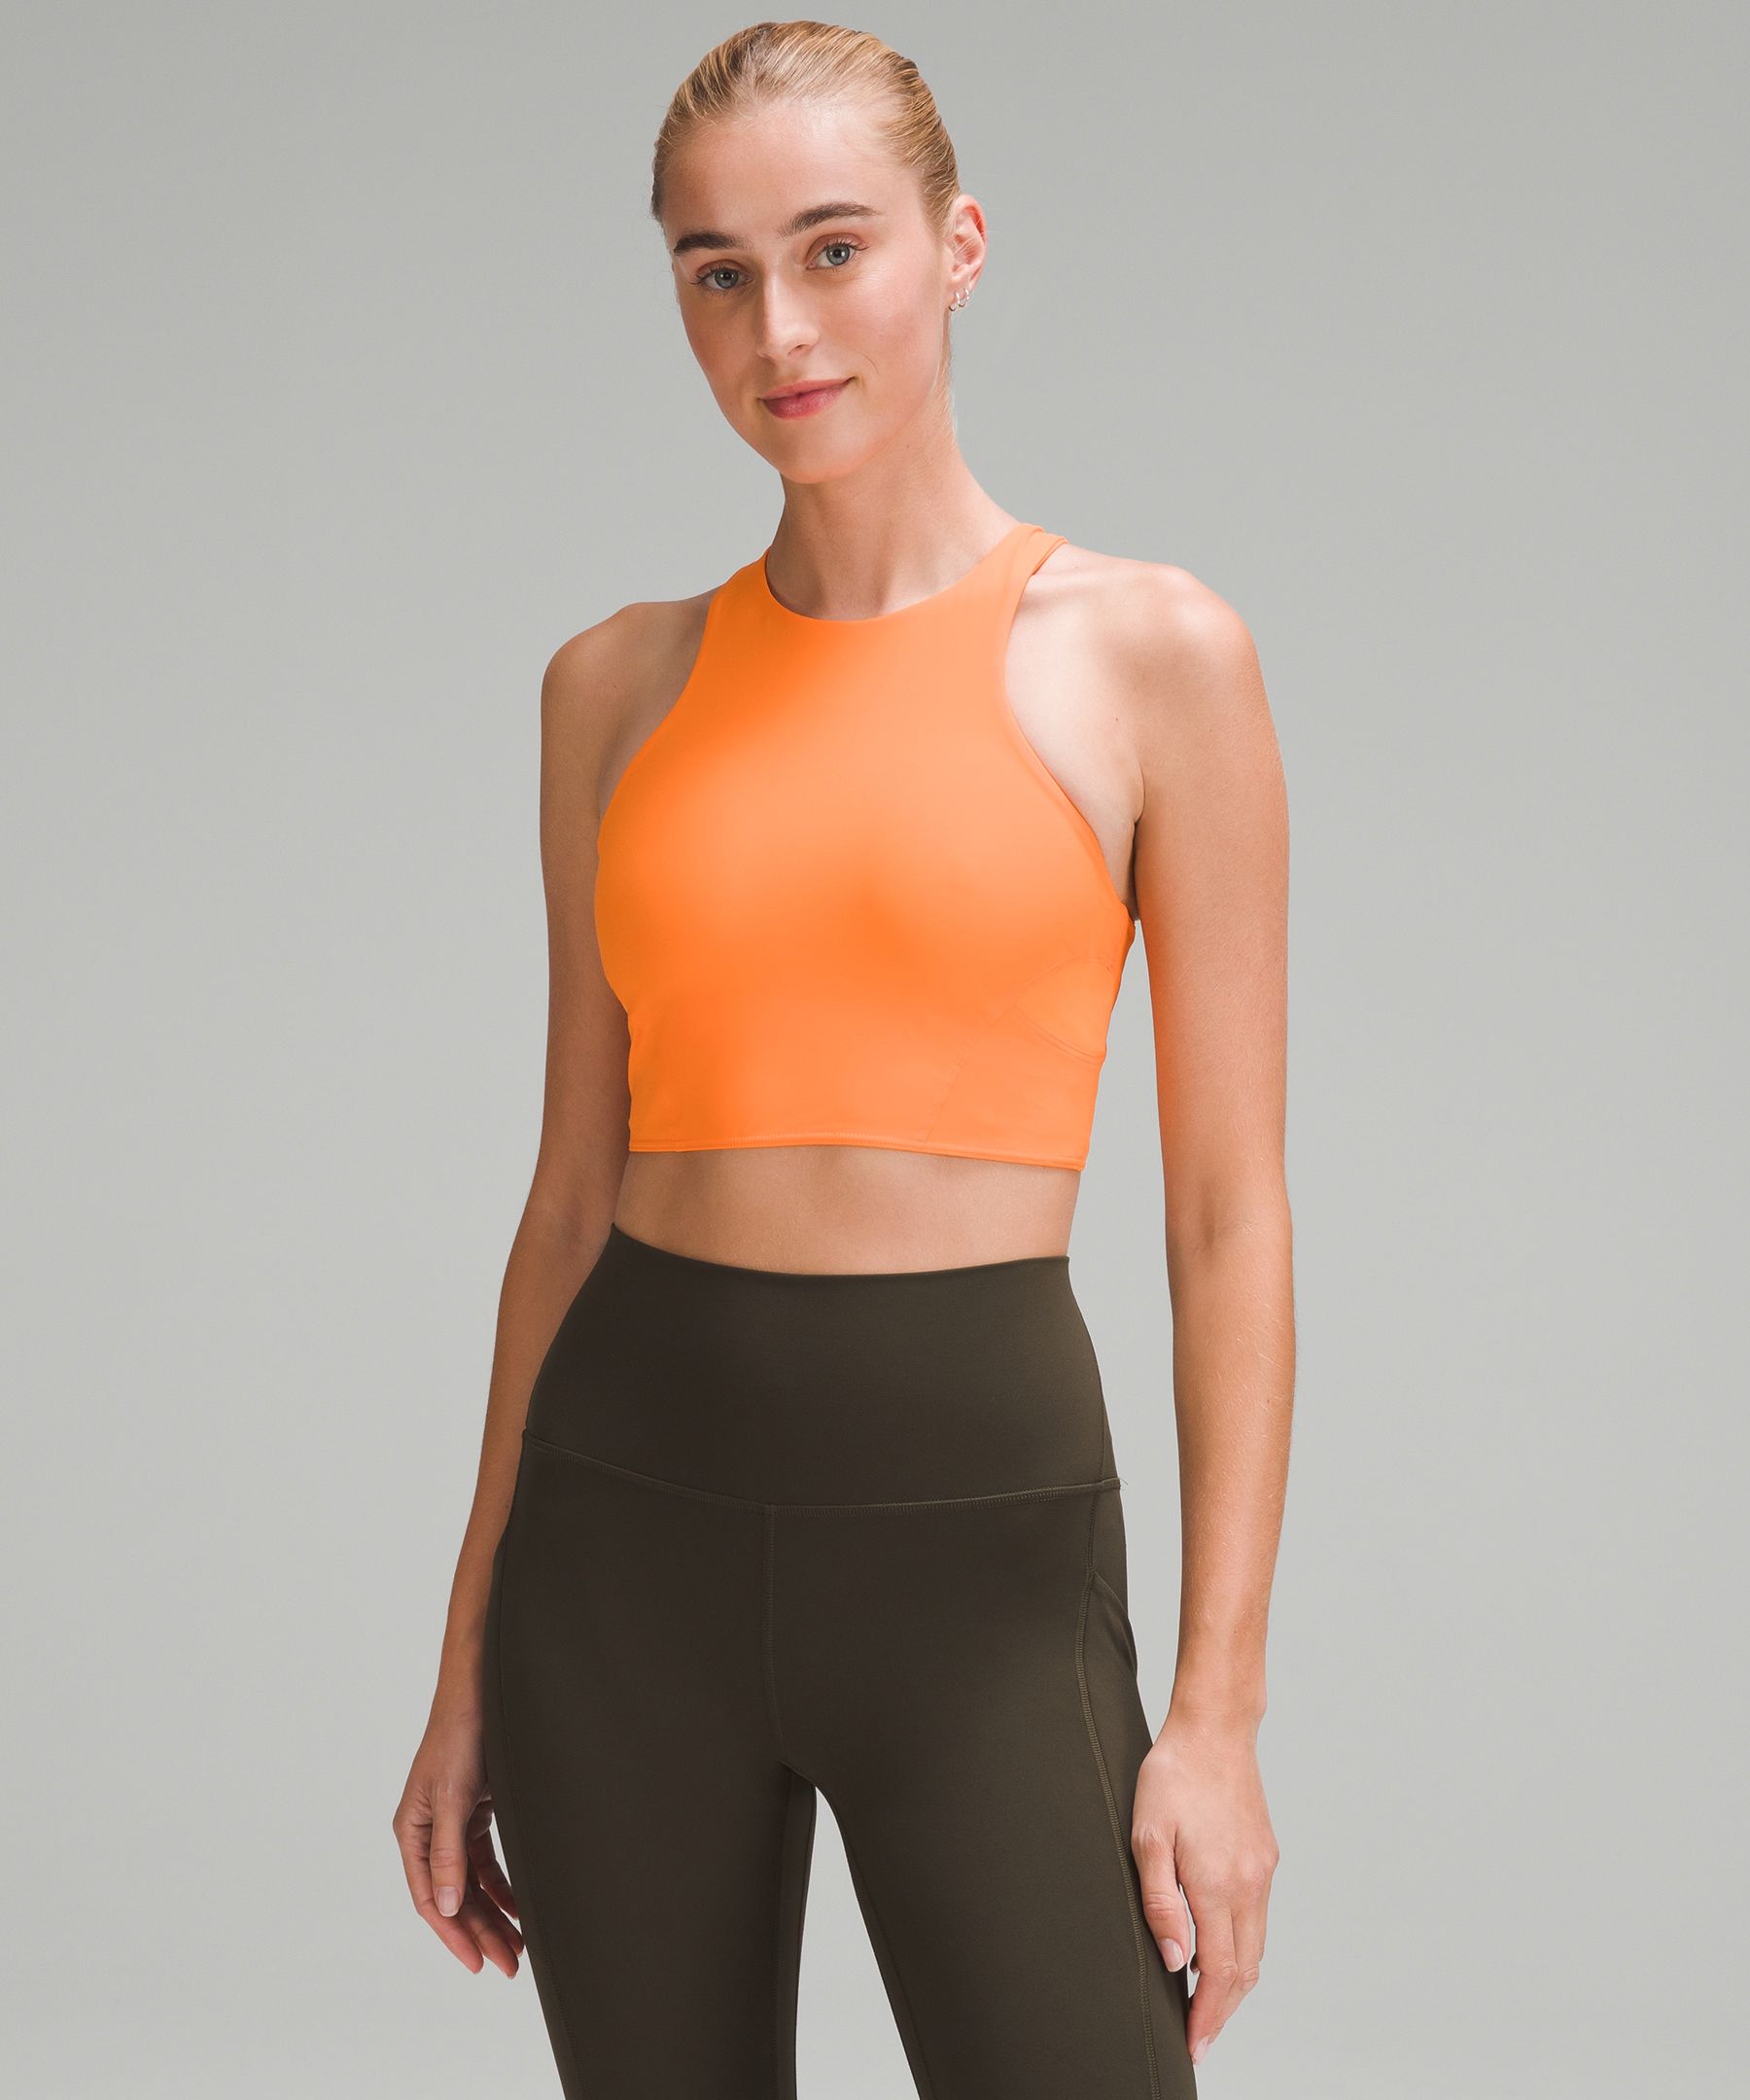 Lululemon,Soft Orange, Strappy-Back Sports bra, EUC, Size 4